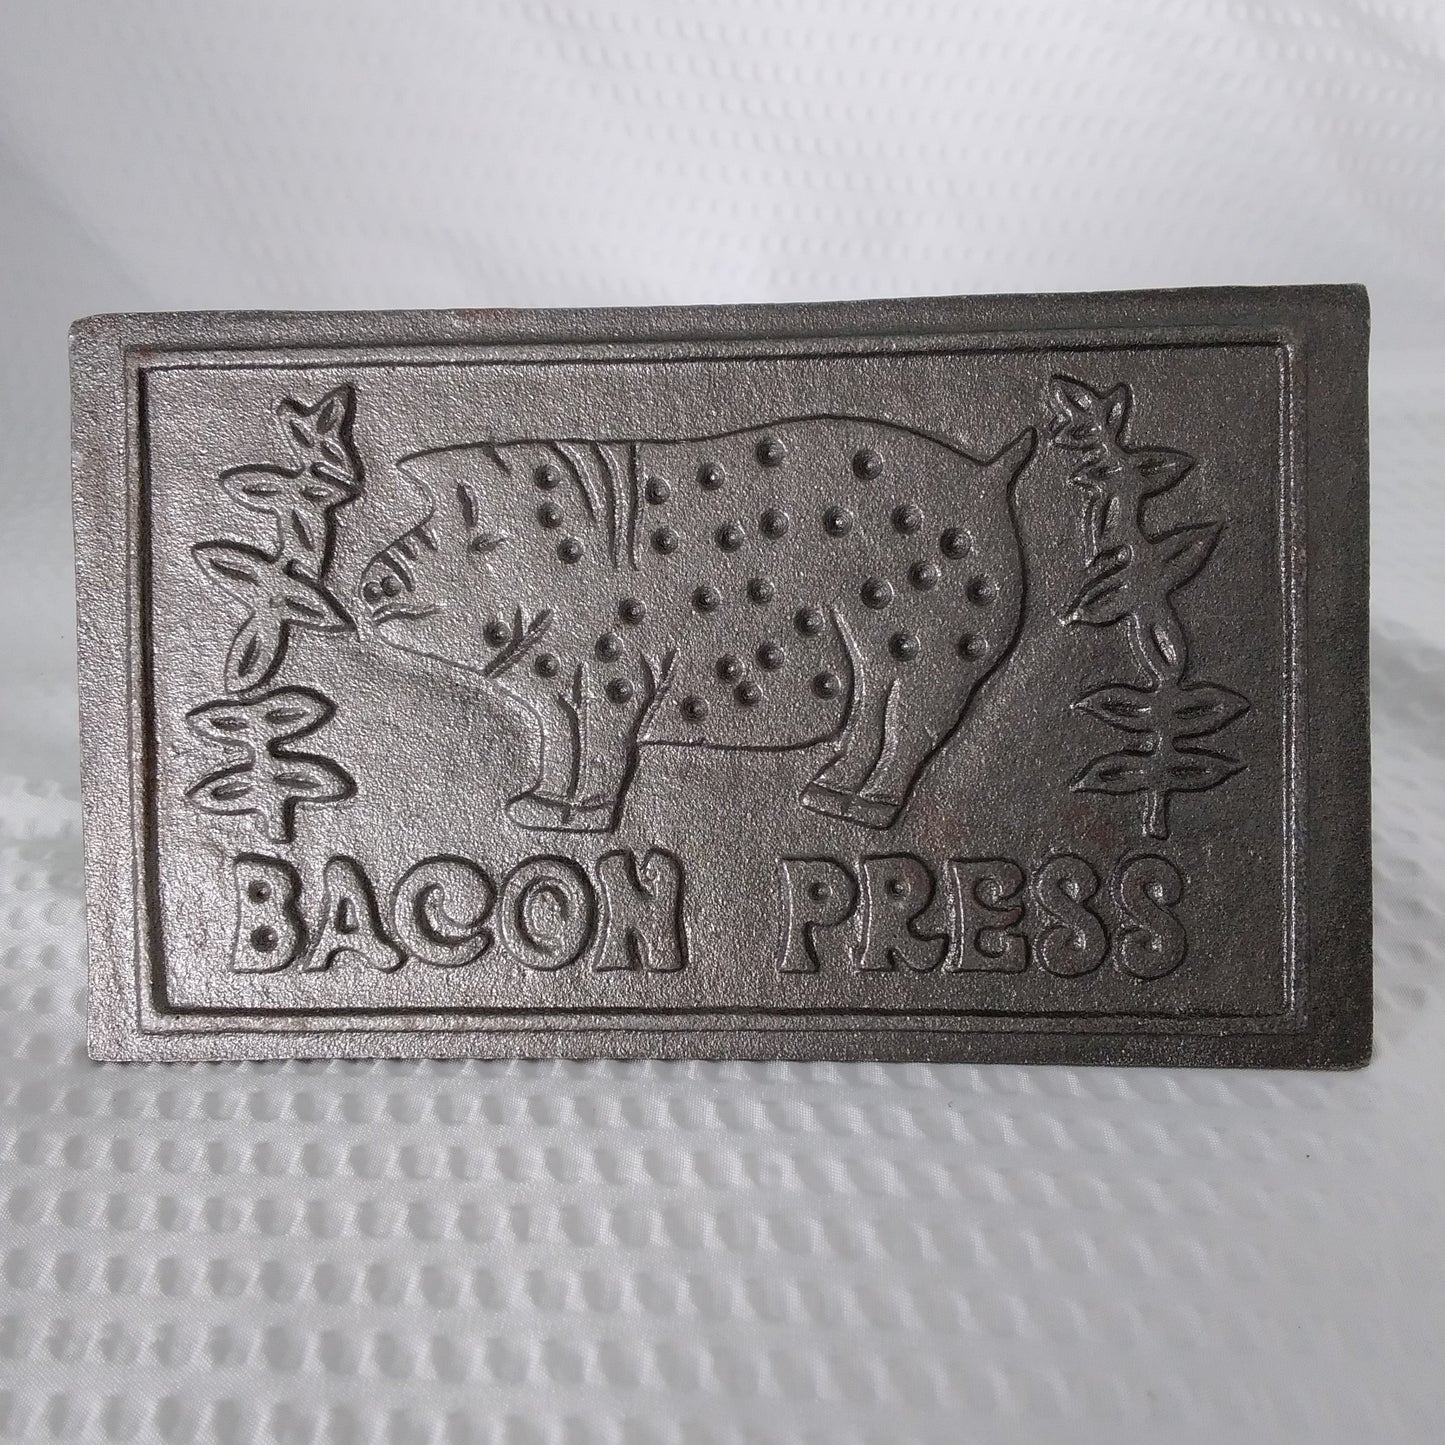 Norpro Cast Iron Bacon Grill/Press